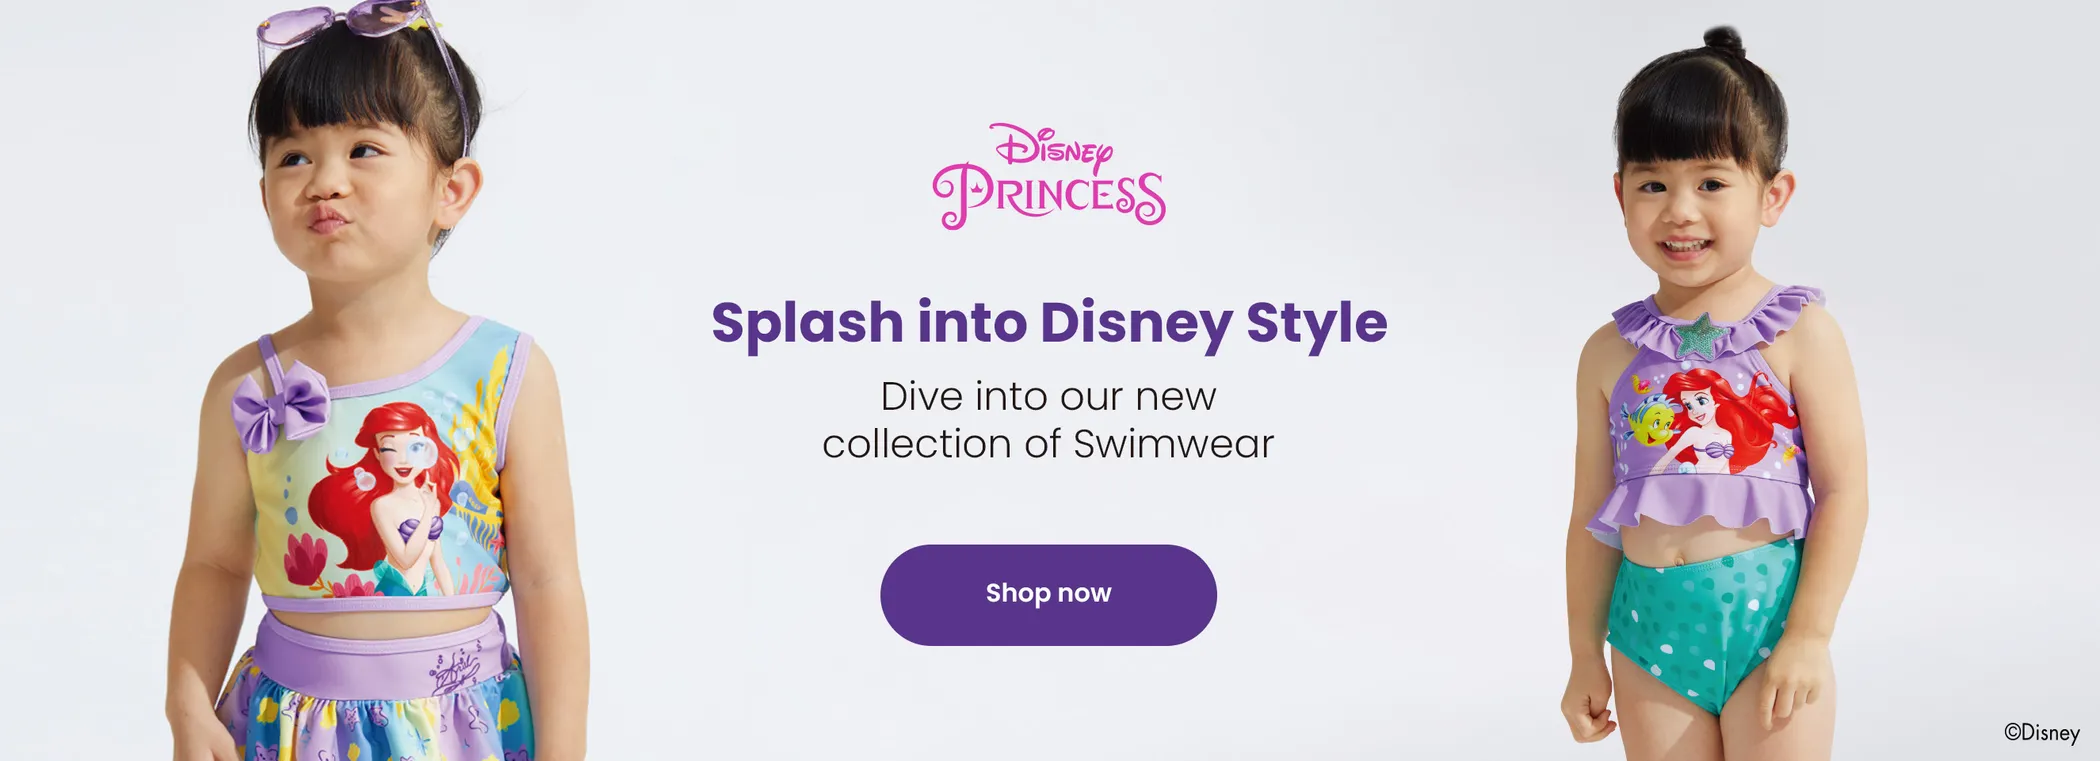 Click it to join Disney Princess LP activity